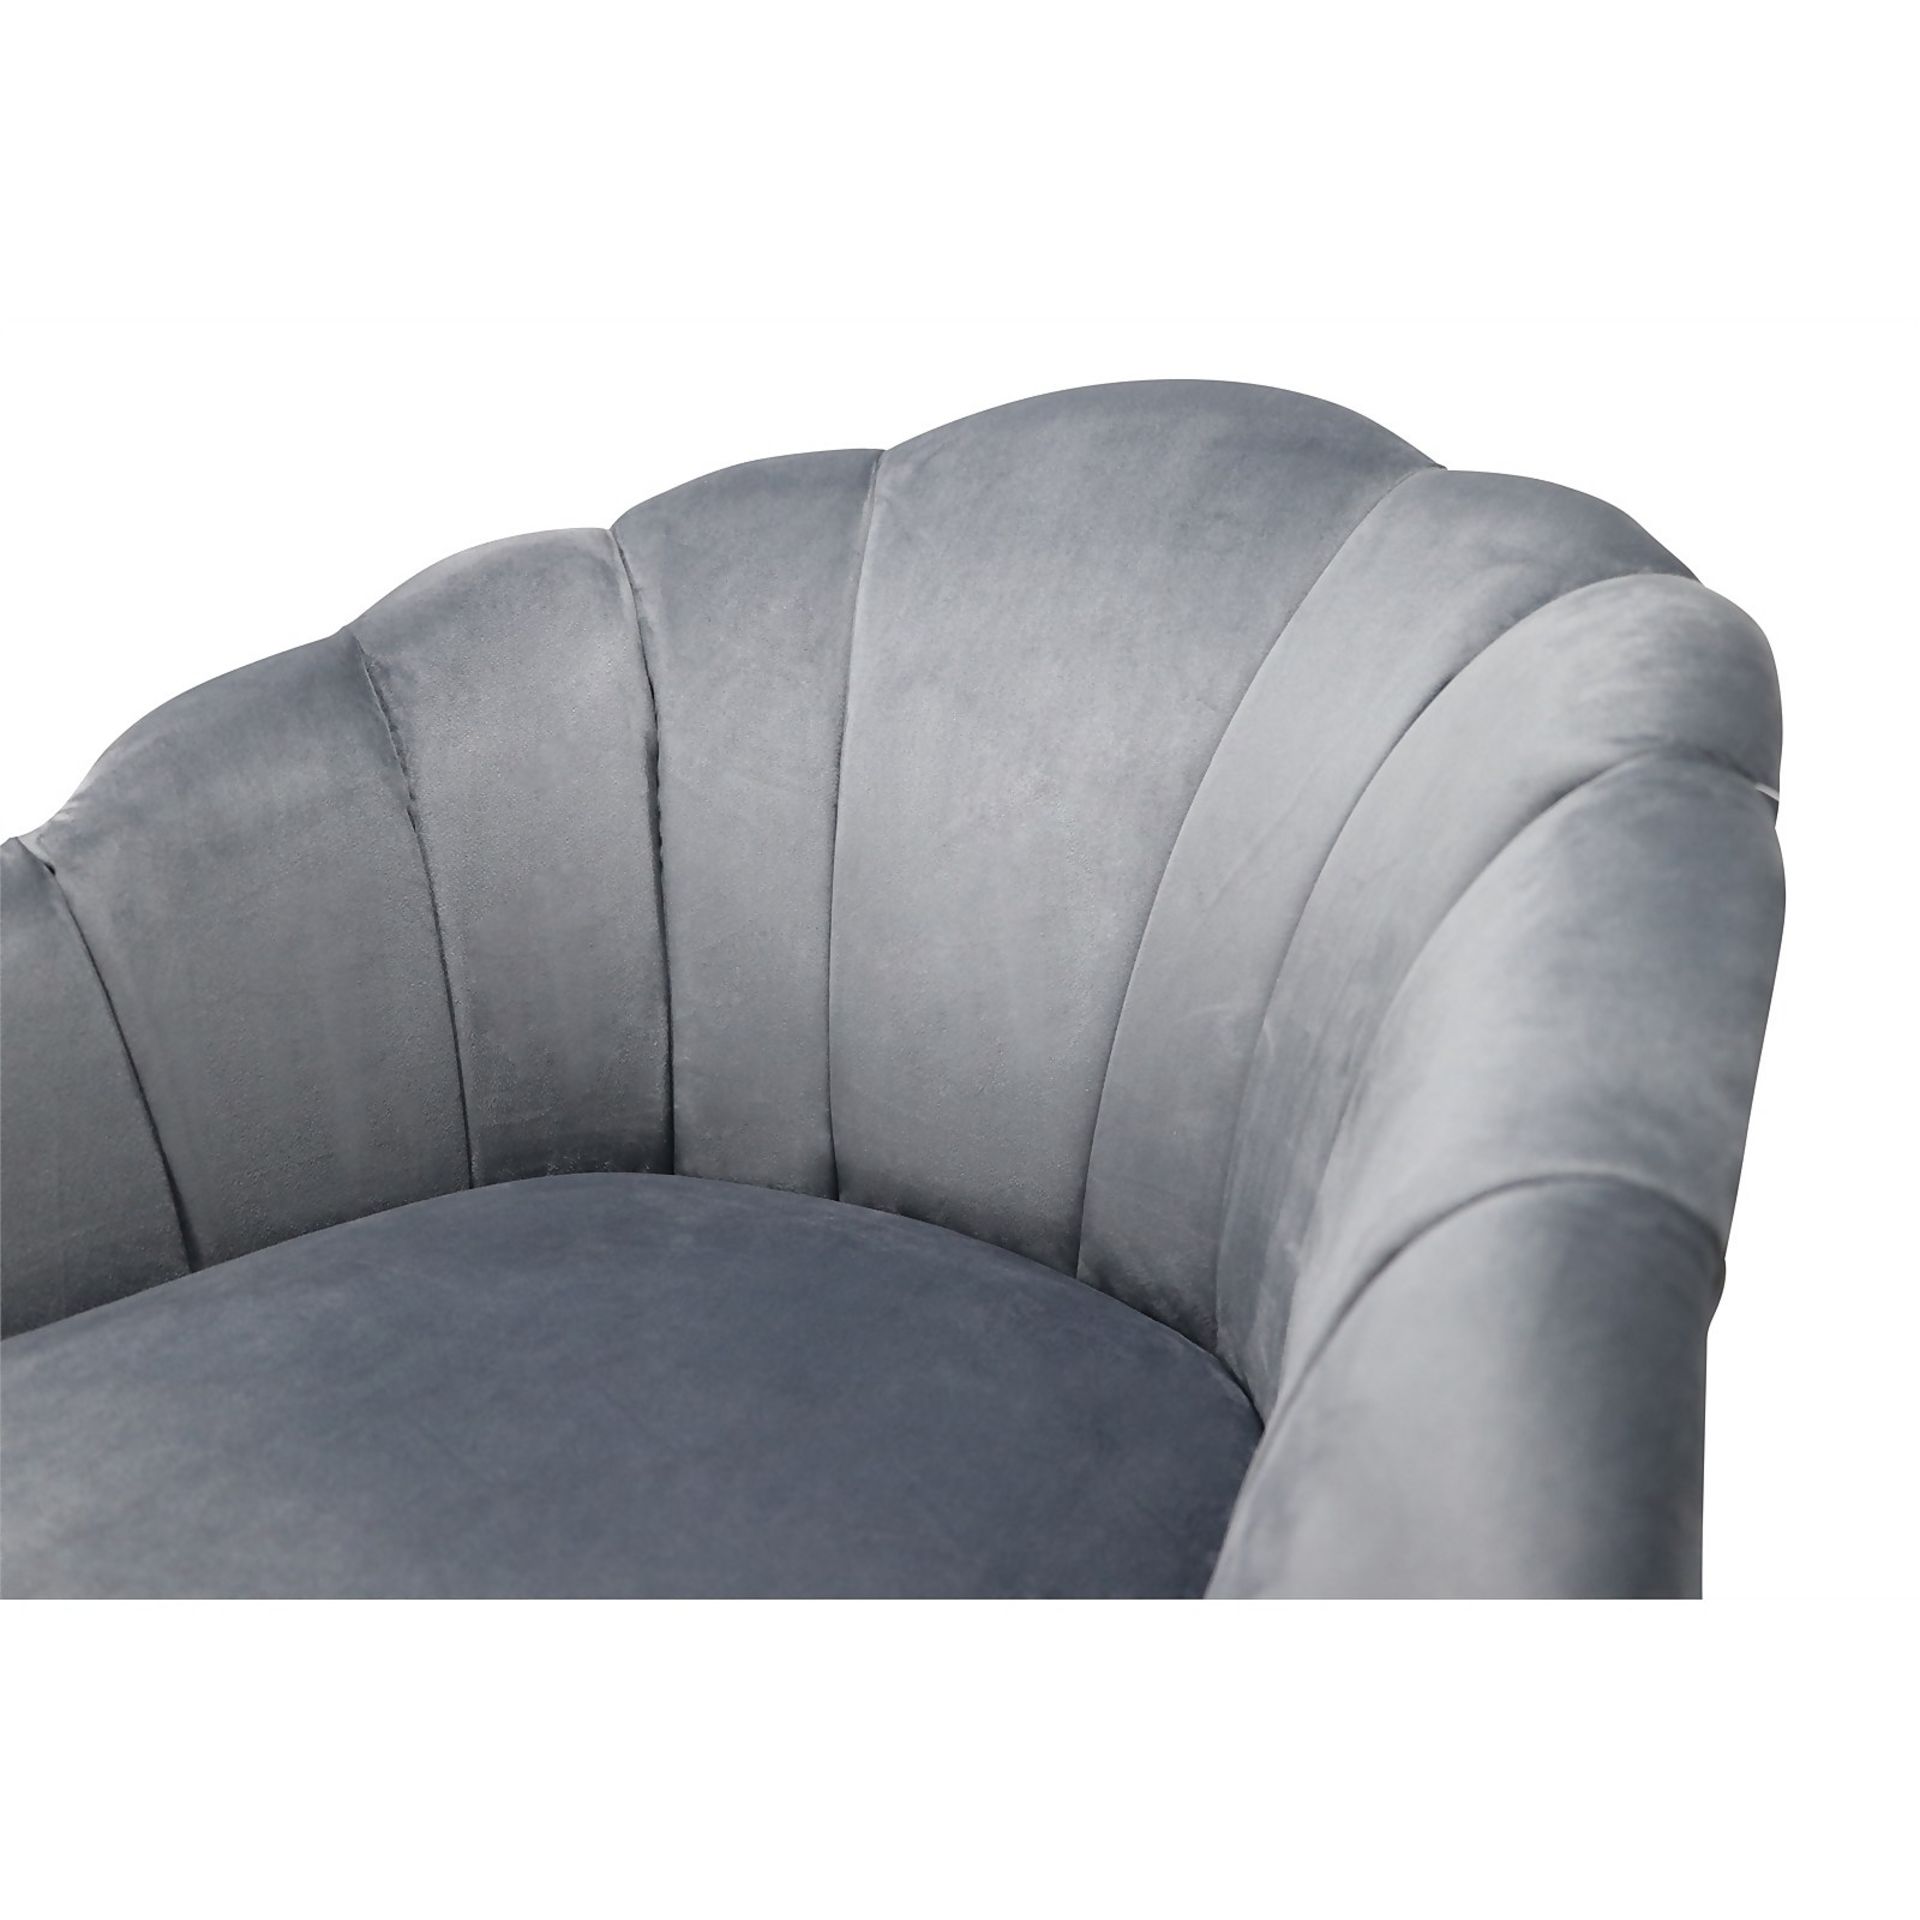 (R2P) 1 X Sophia Occasional Chair Grey. Velvet Fabric Cover. Metal Legs. (H77 x W64 x D71cm) - Image 2 of 4